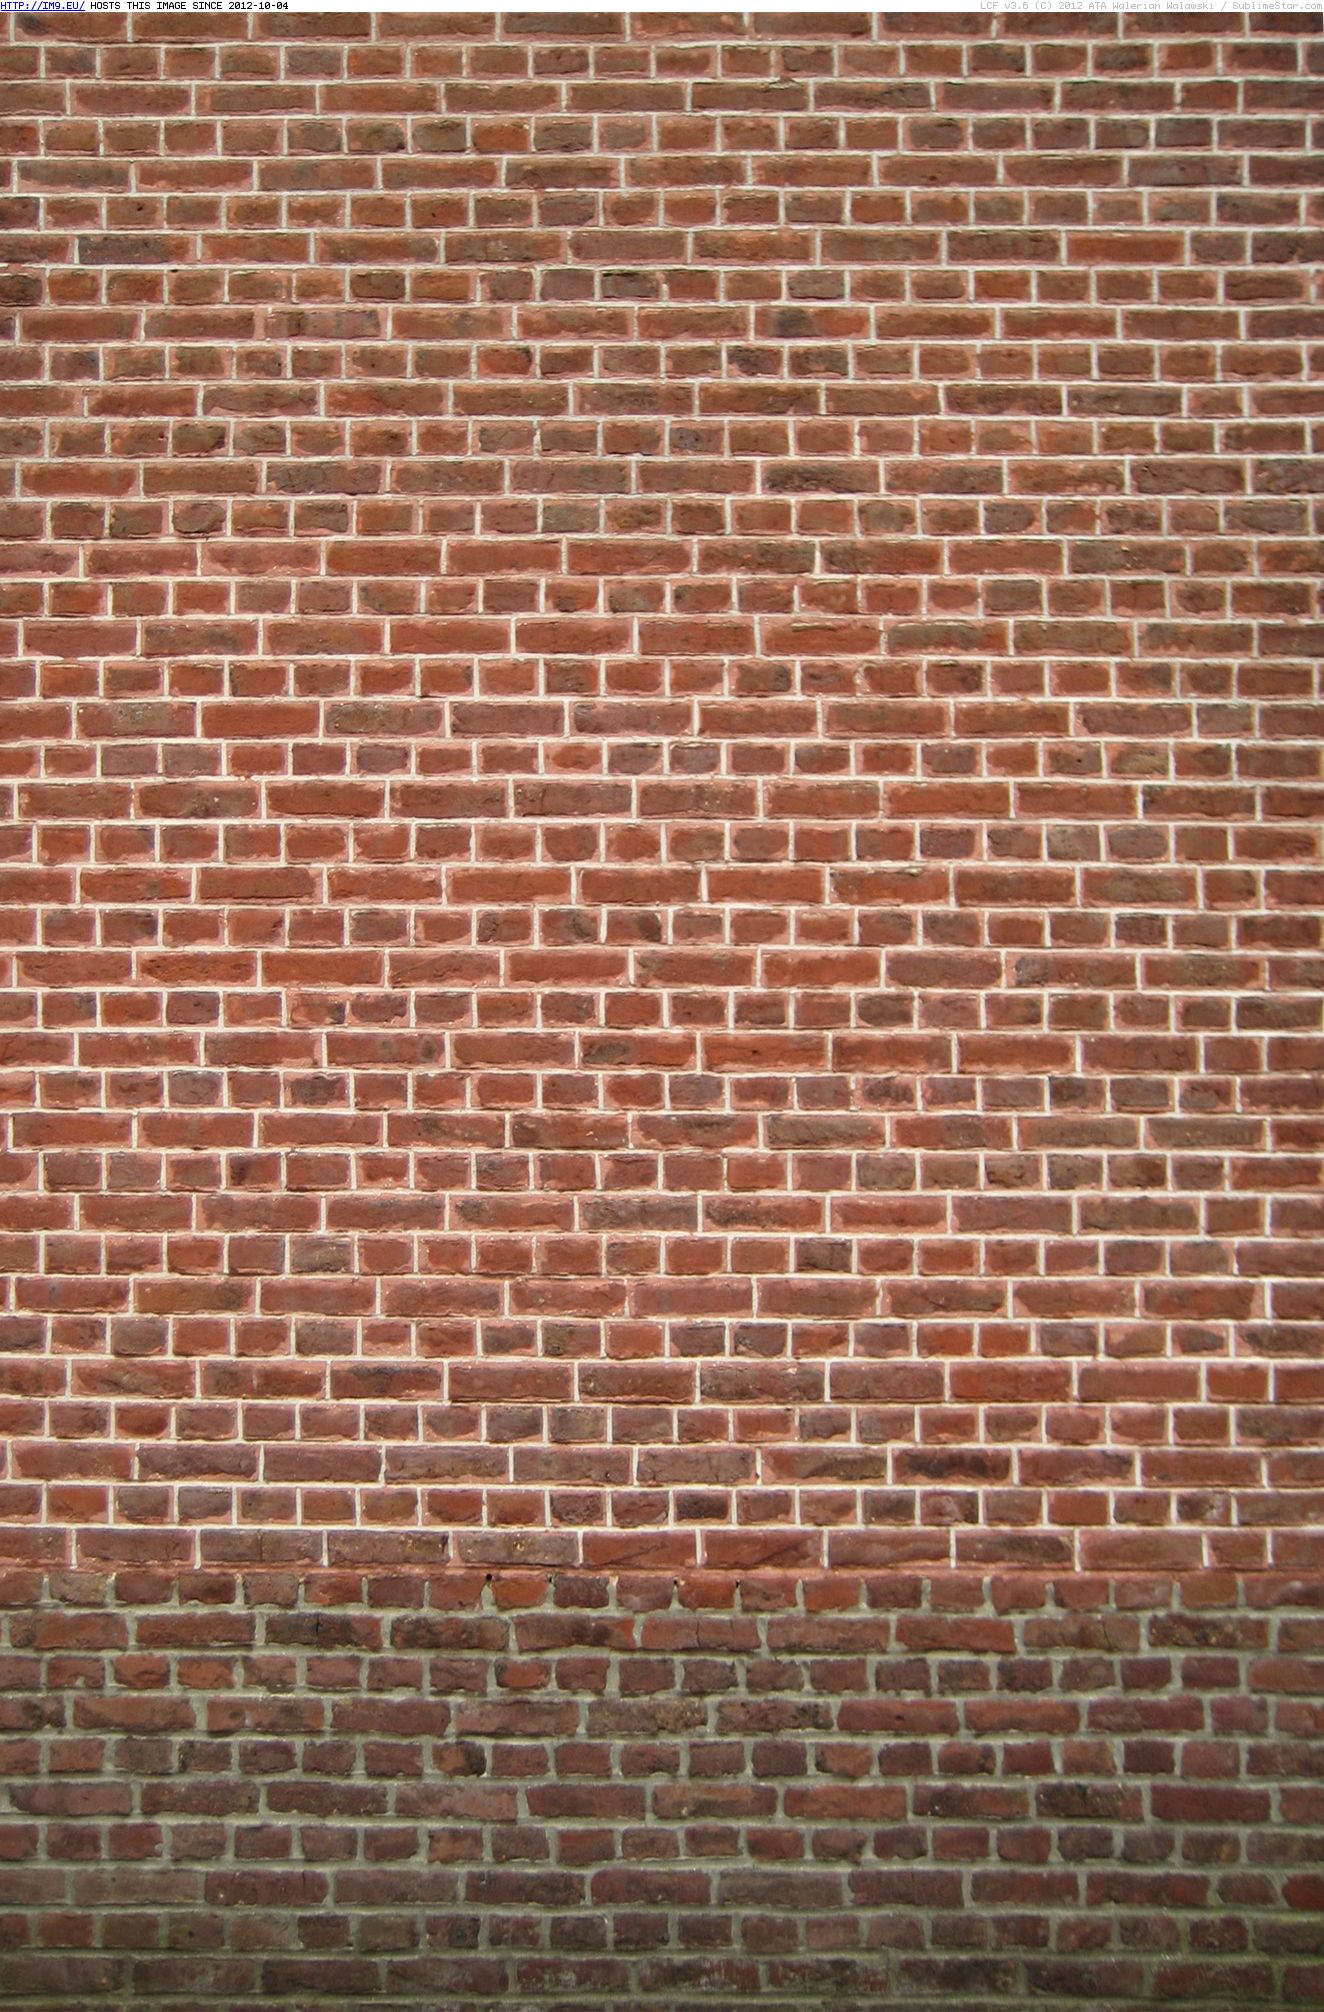 Brick Small Brown 6 (brick wall) (in Brick walls textures and wallpapers)